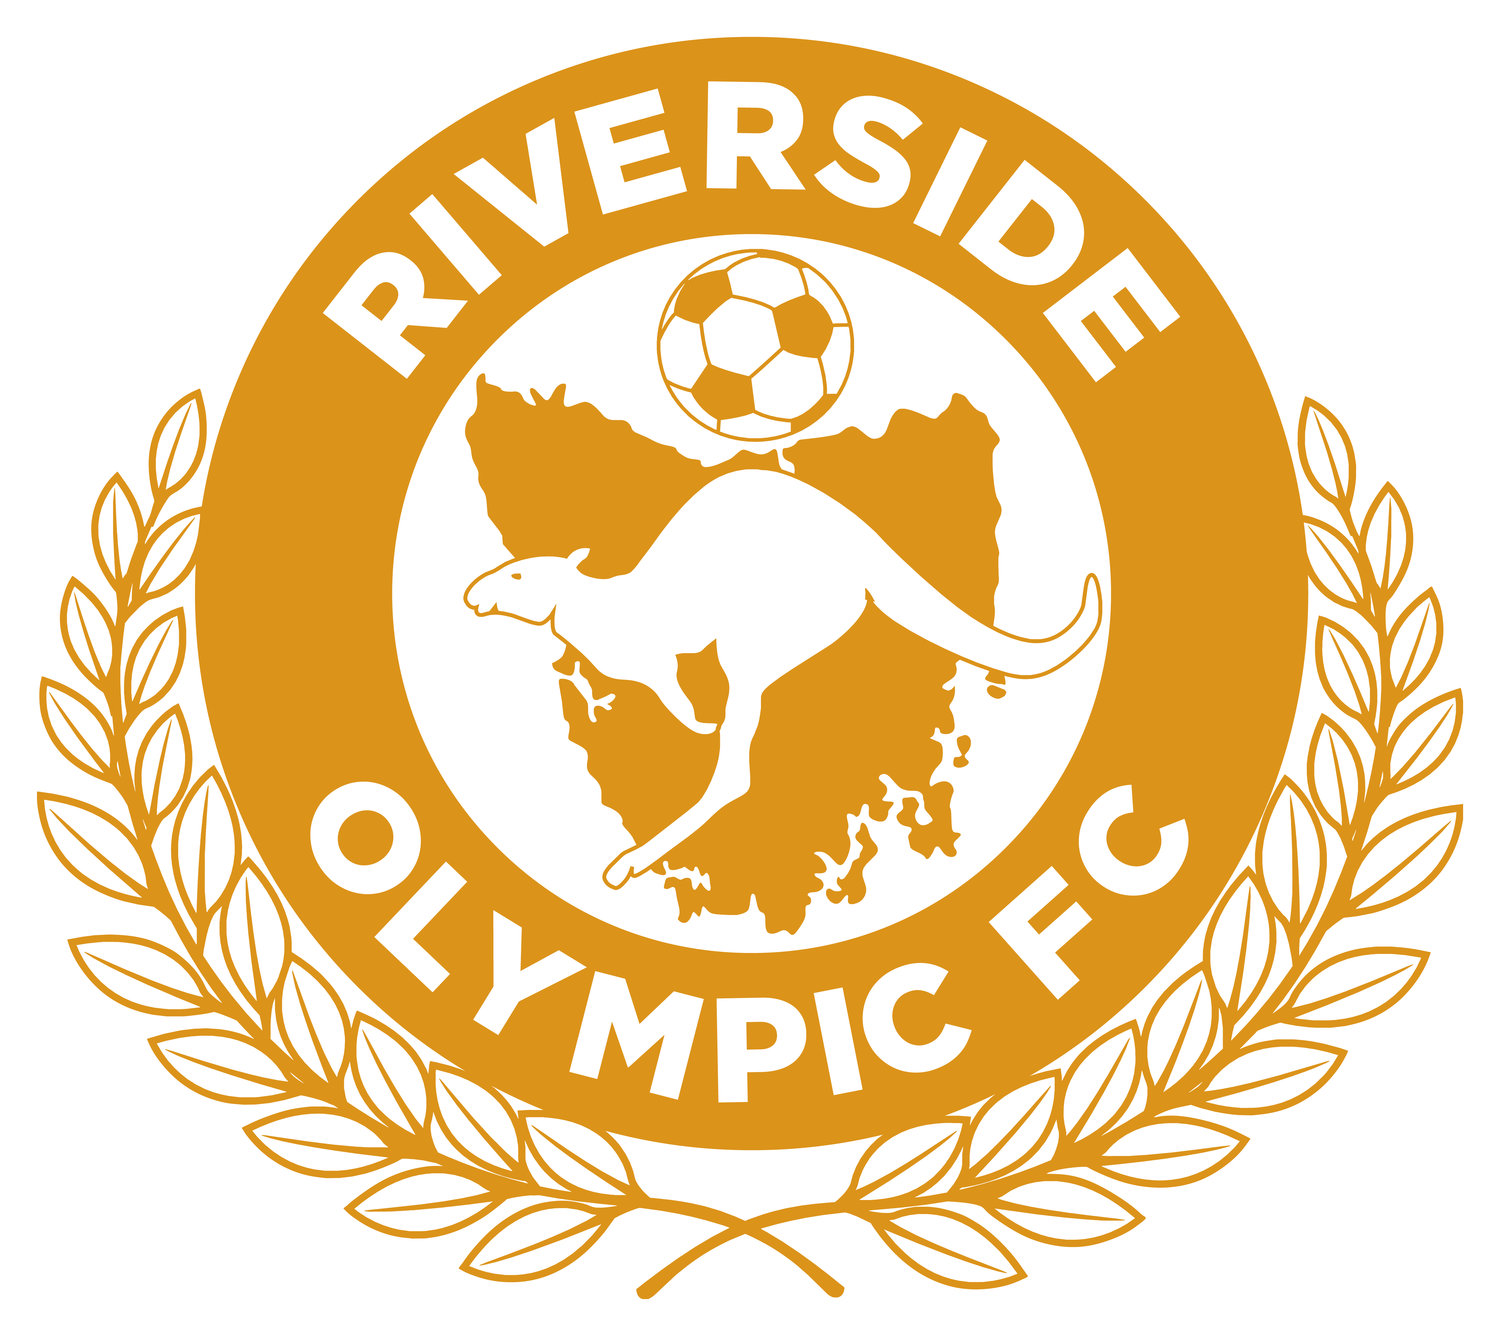 Riverside Olympic team logo